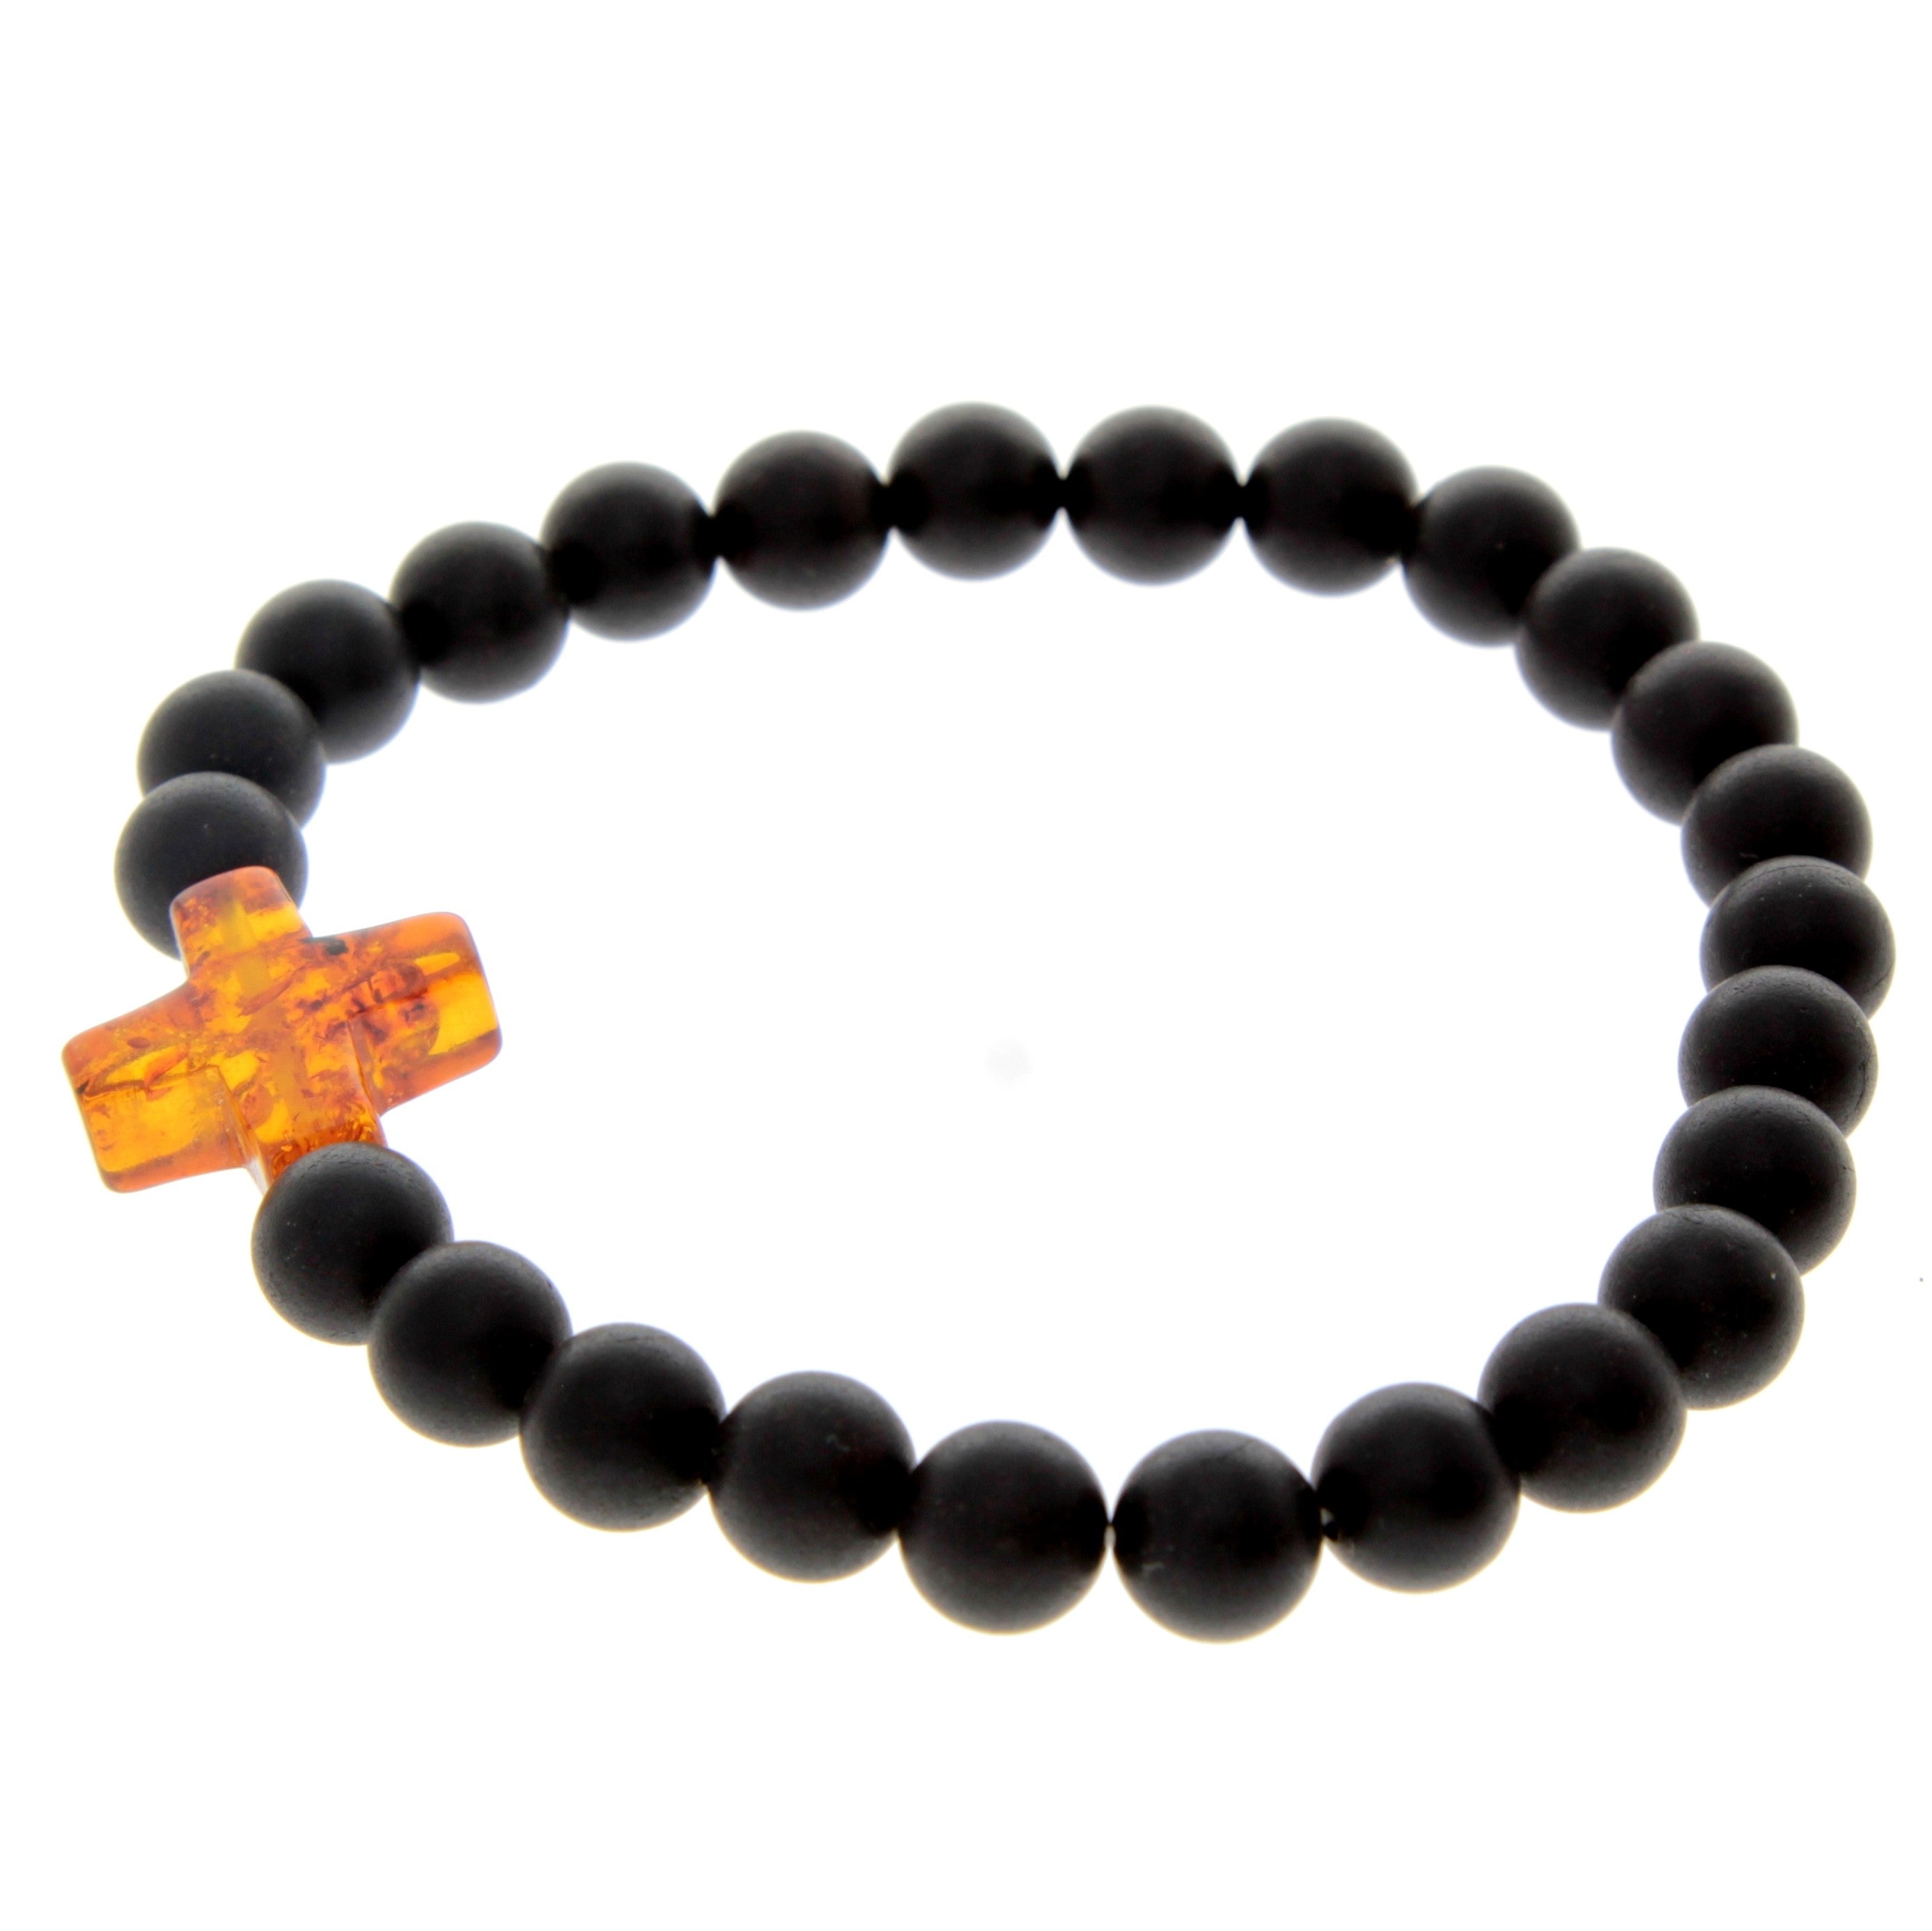 Genuine Baltic Amber Elastic Bracelet for Men with Amber Cross - MB010S